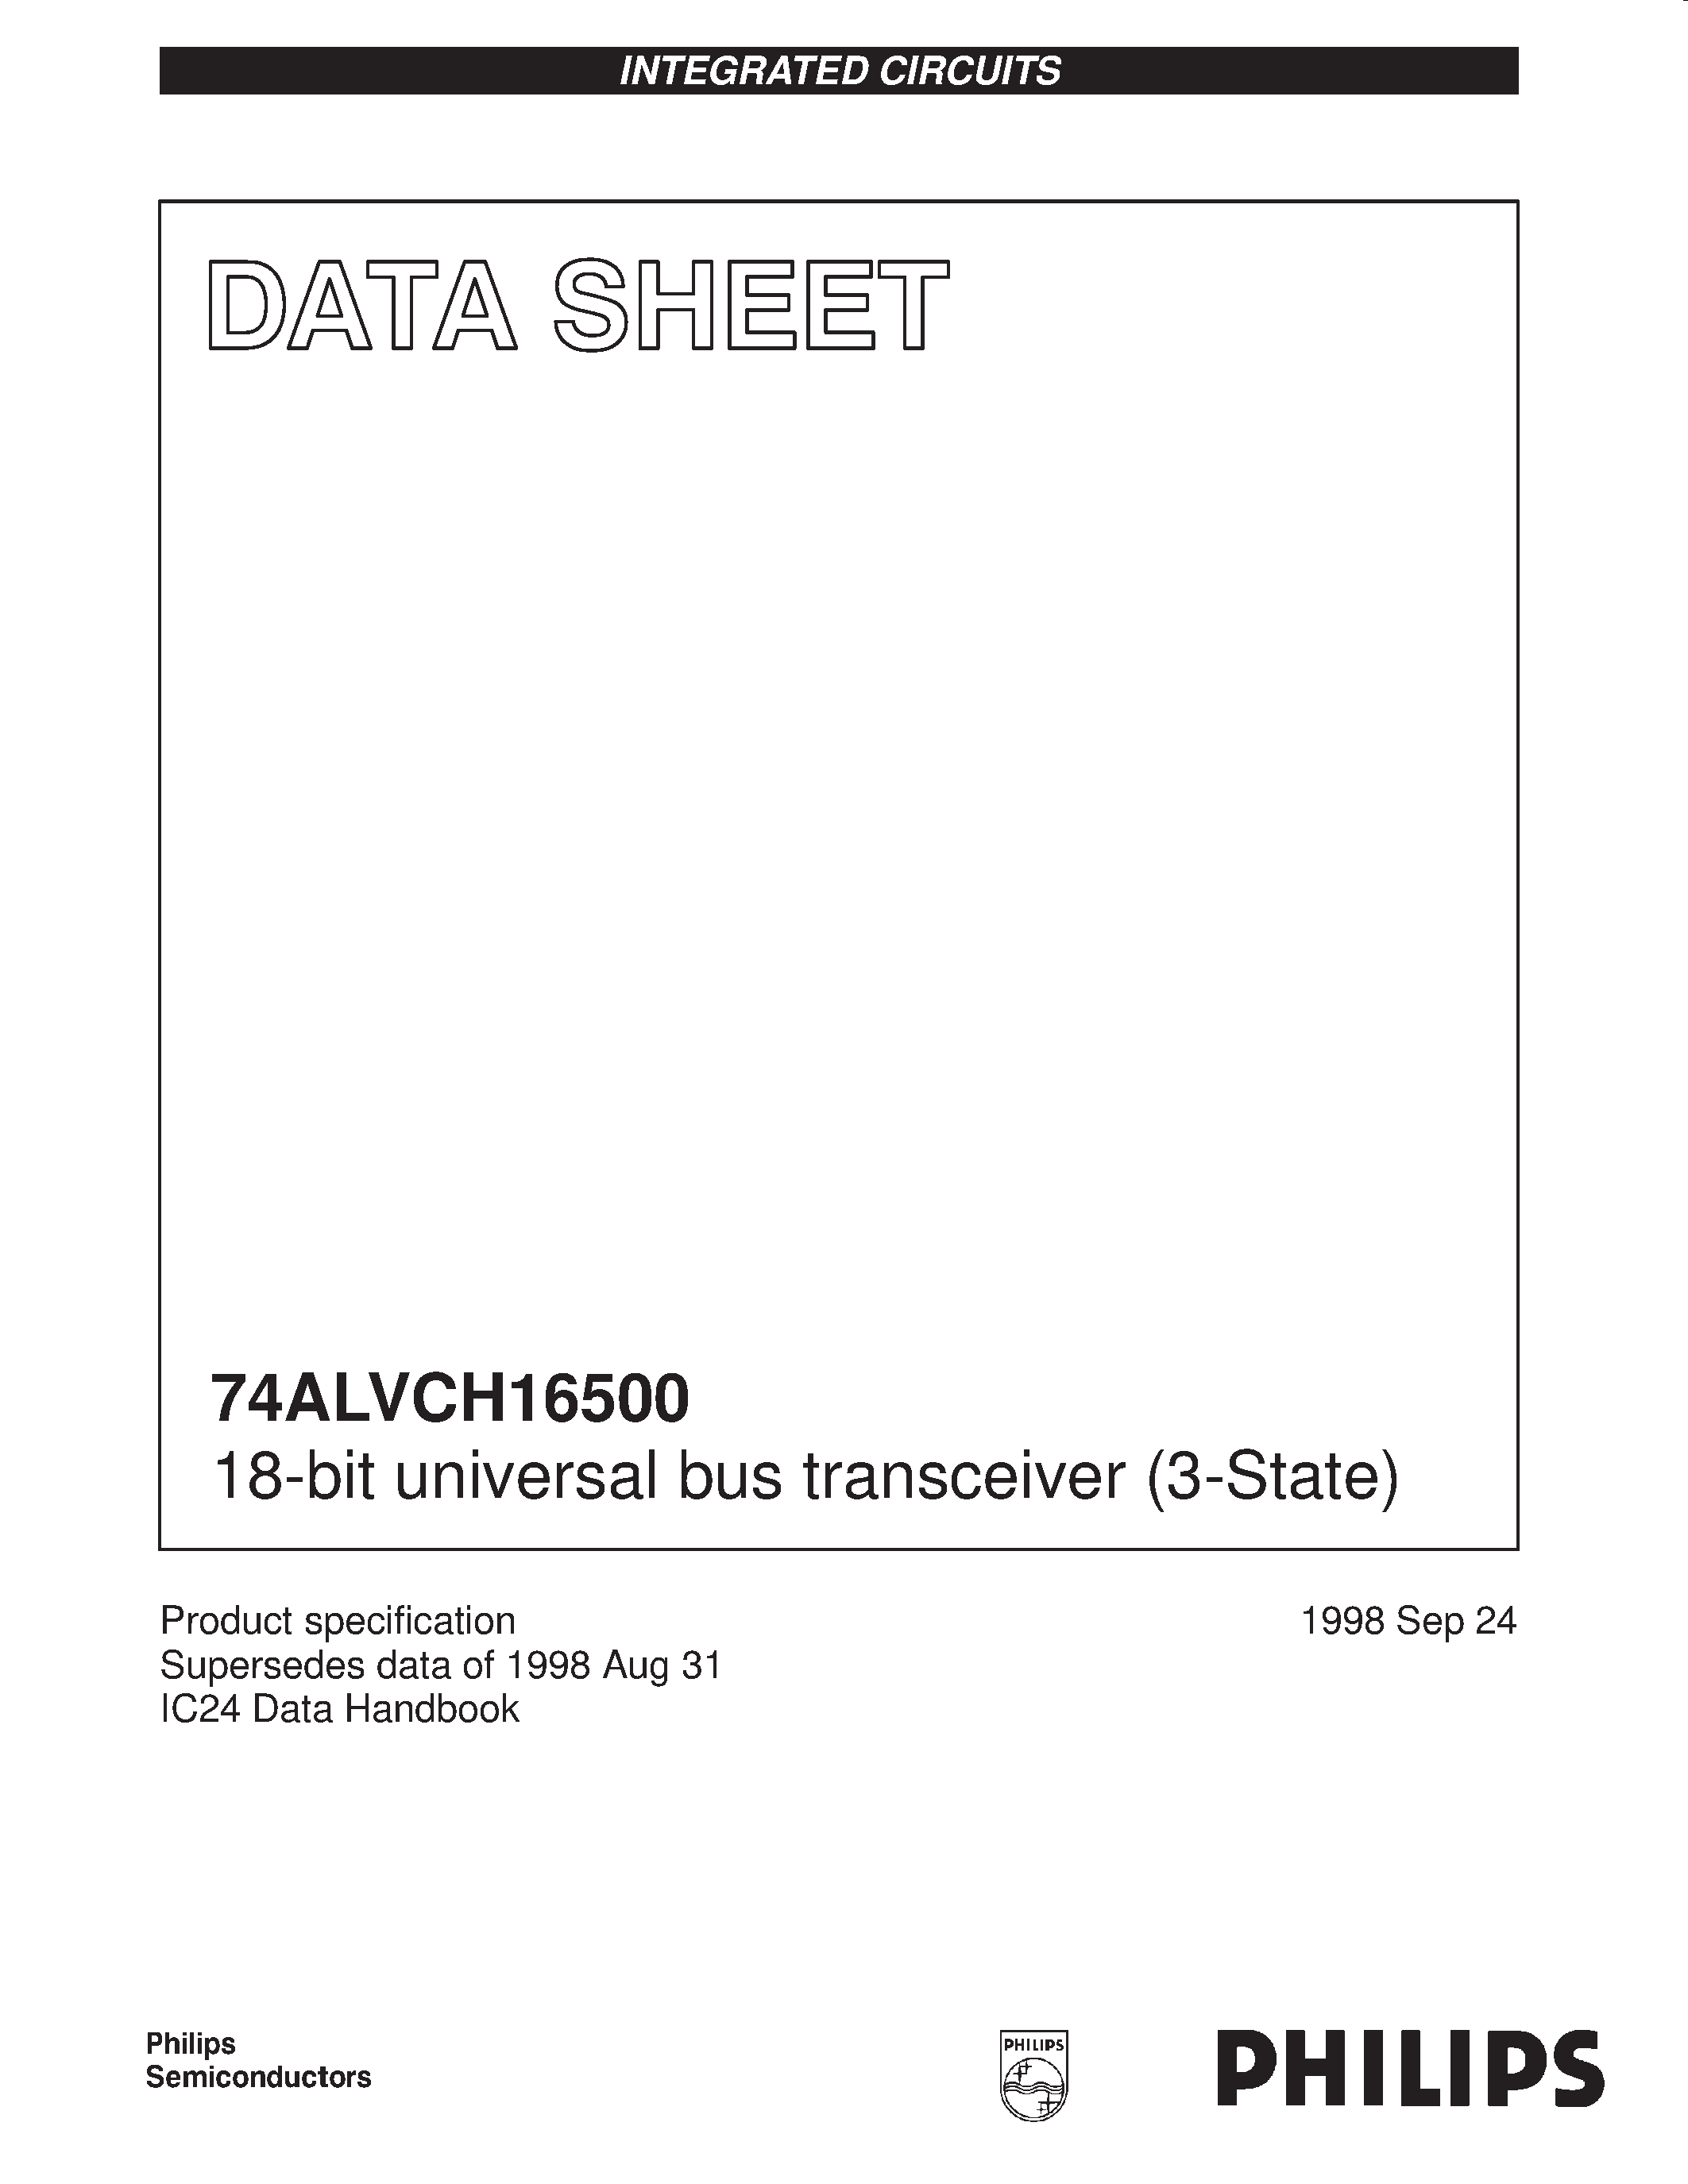 Datasheet 74ALVCH16500 - 18-bit universal bus transceiver 3-State page 1